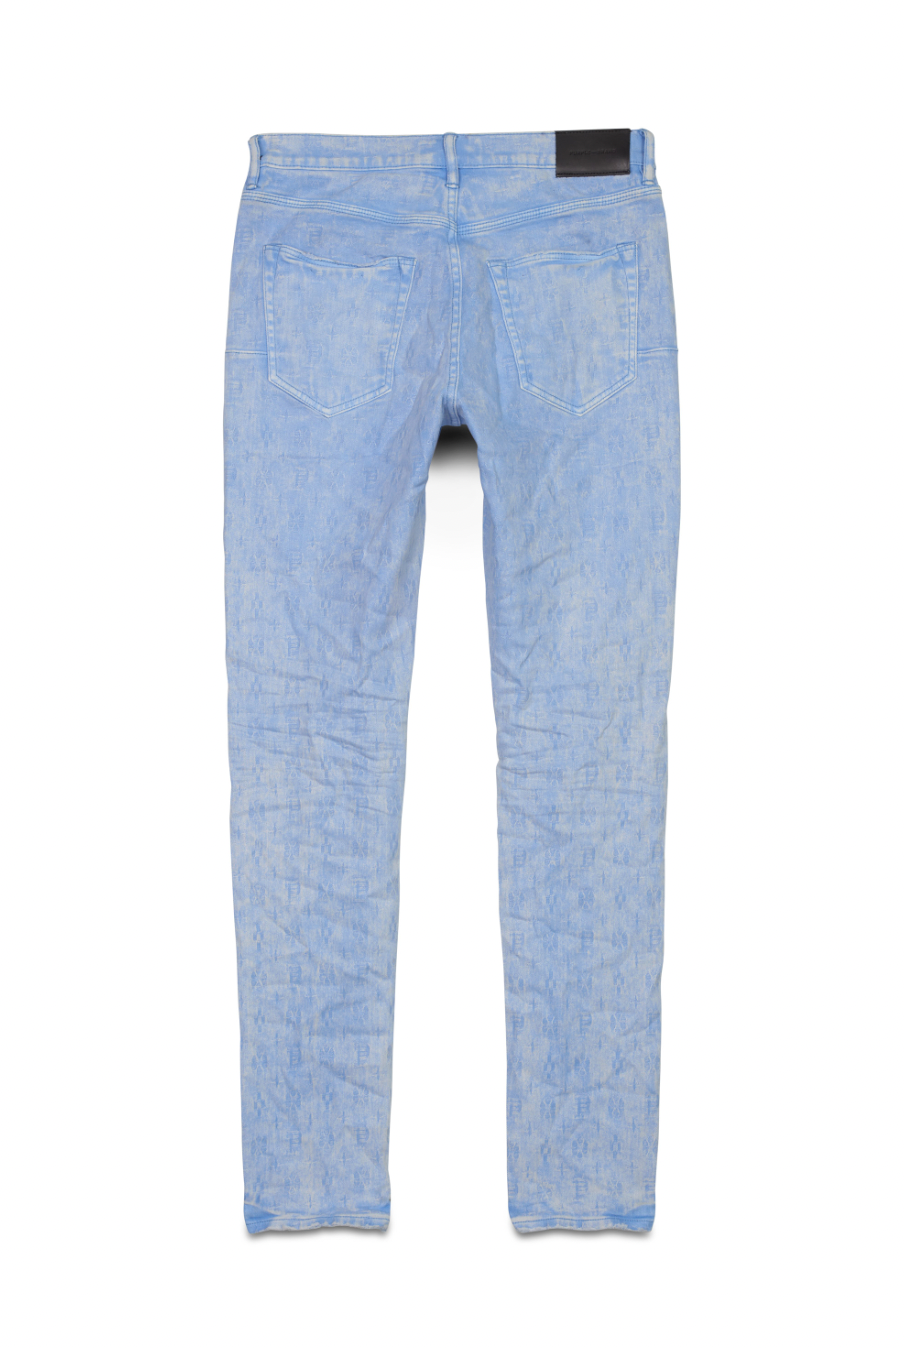 Purple Brand Men's Monogram Jacquard Skinny Jeans - Blue - Size 38